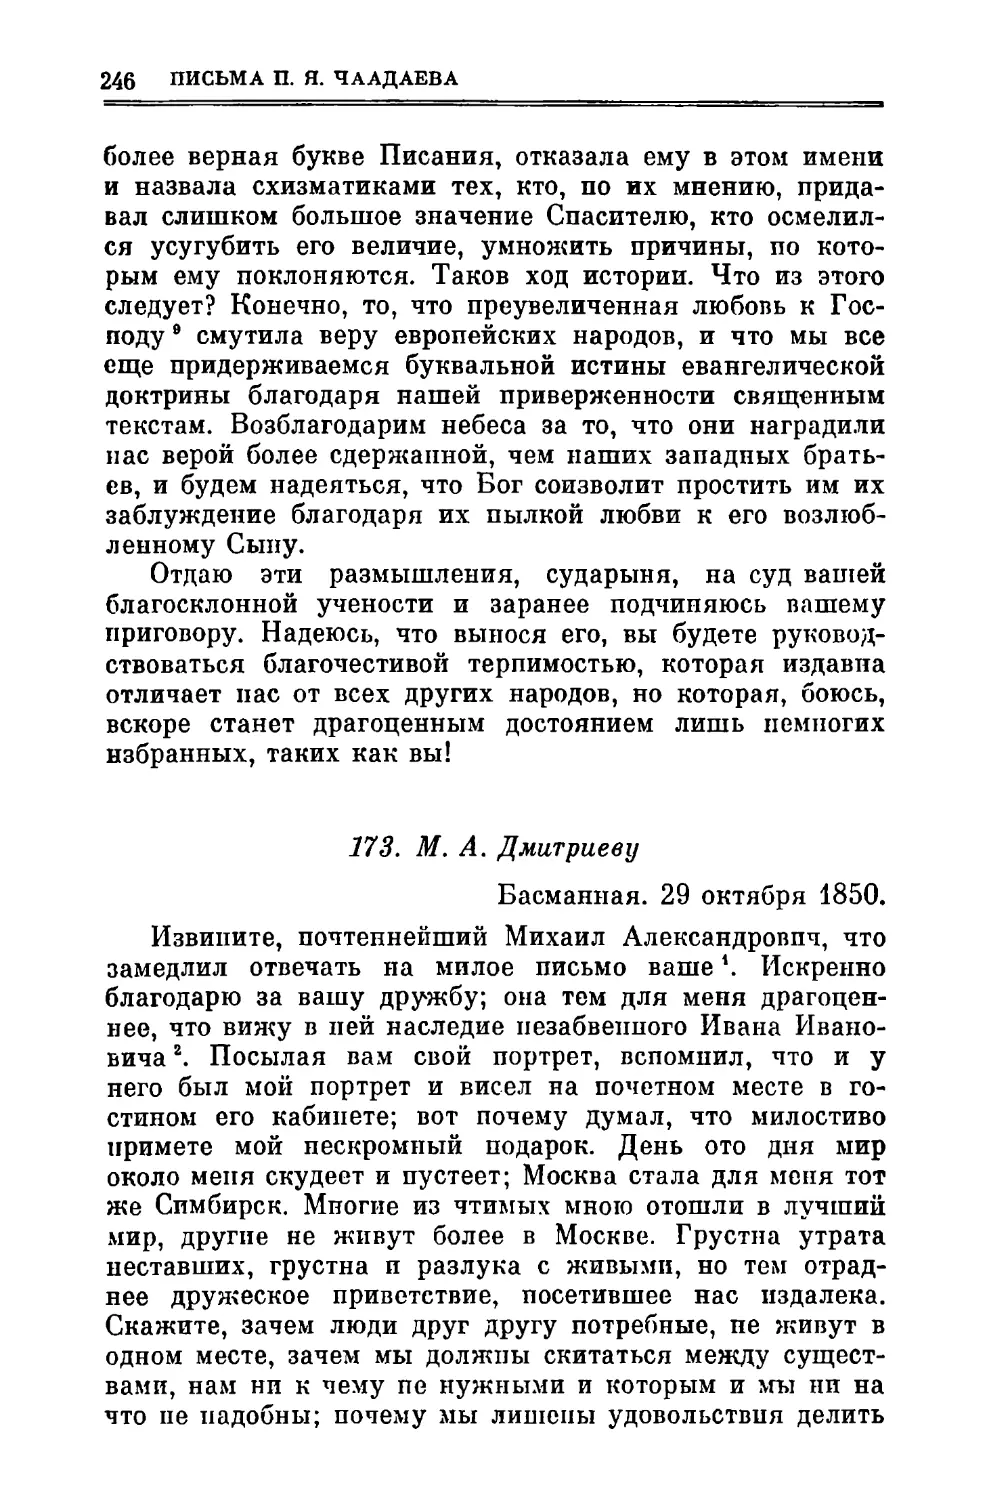 173. Дмитриеву М.А. 29.X